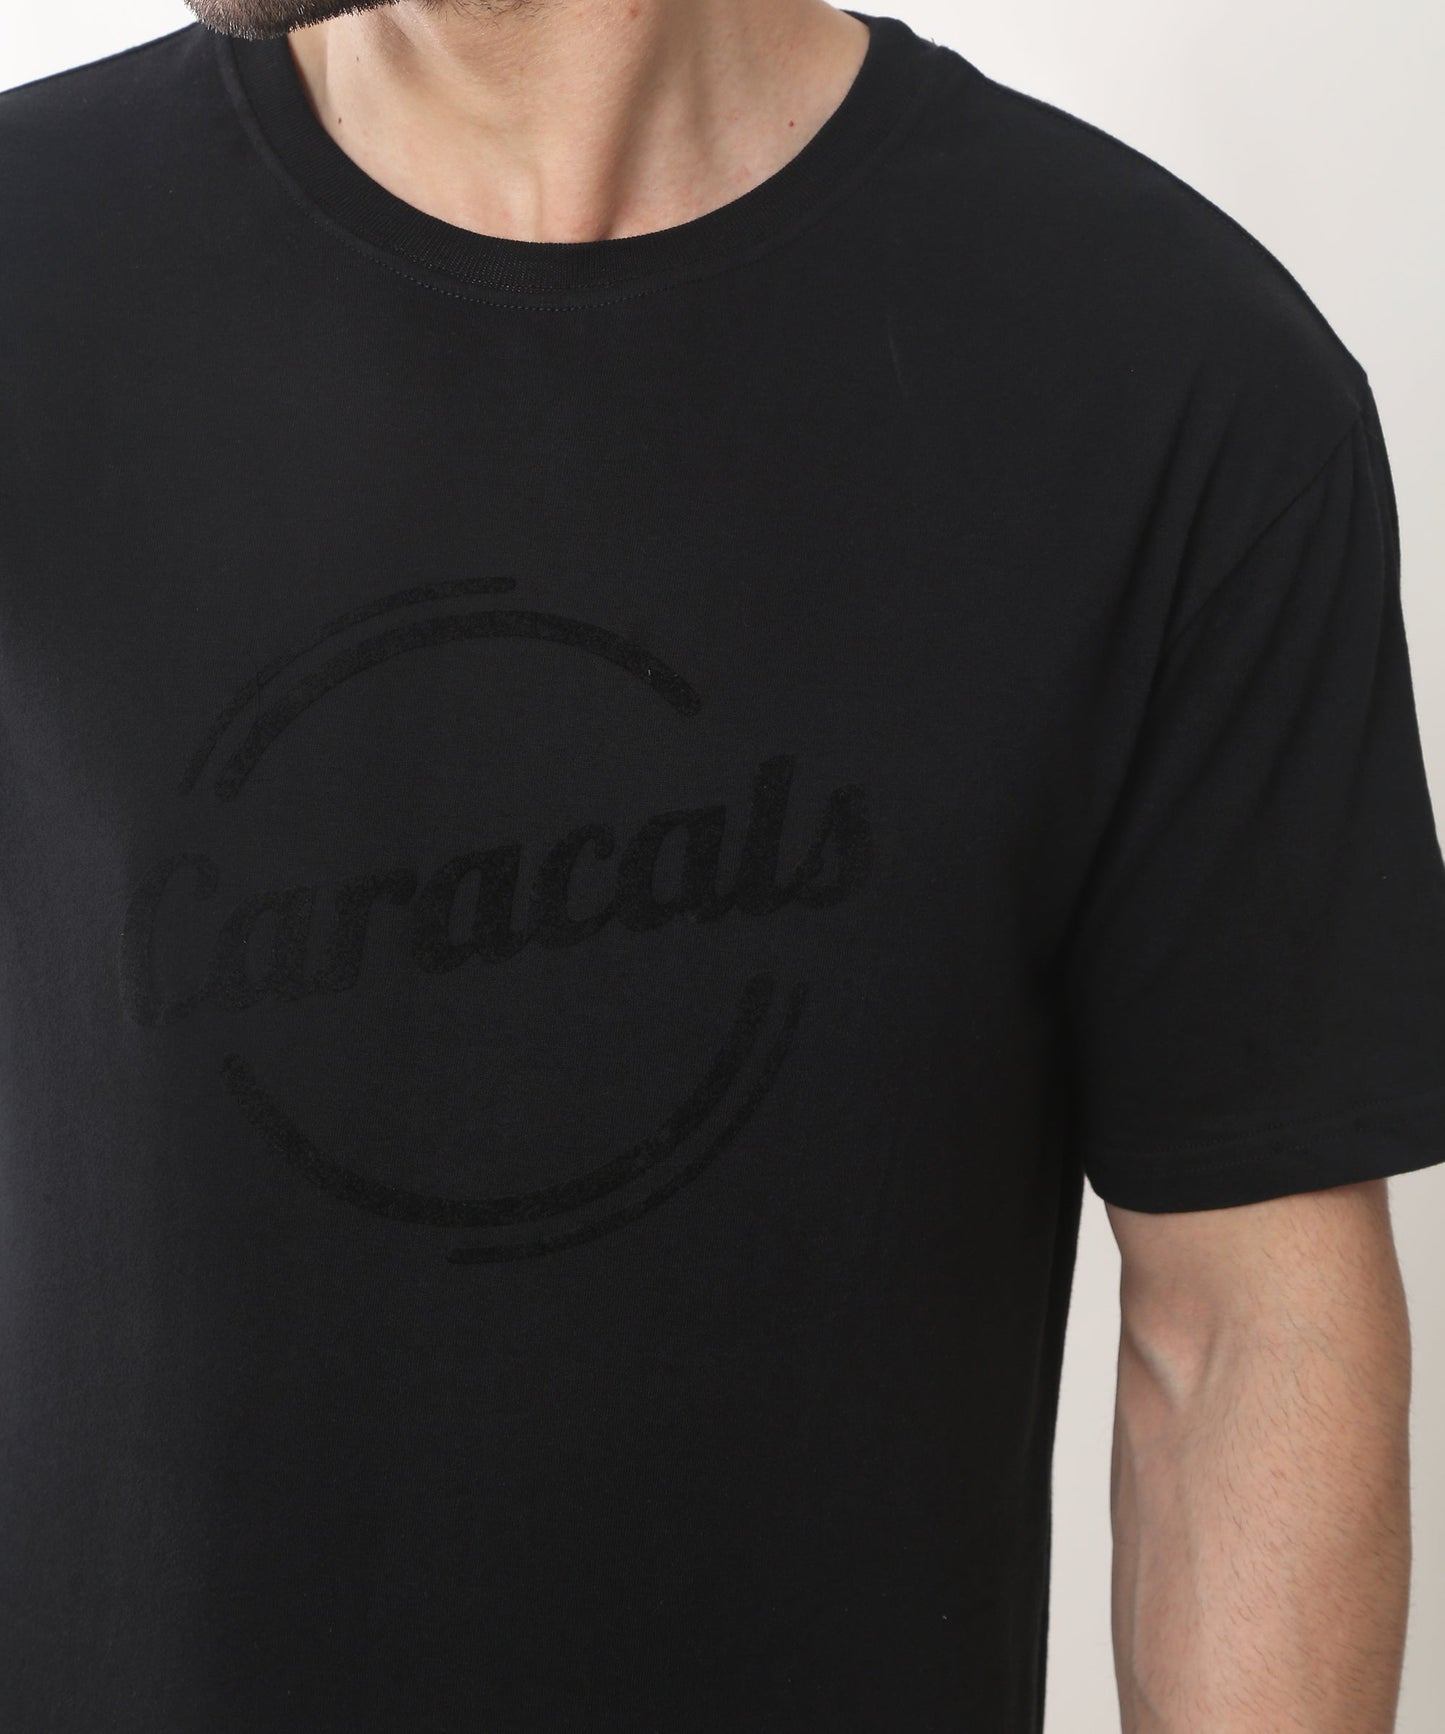 Black caracals T-shirt